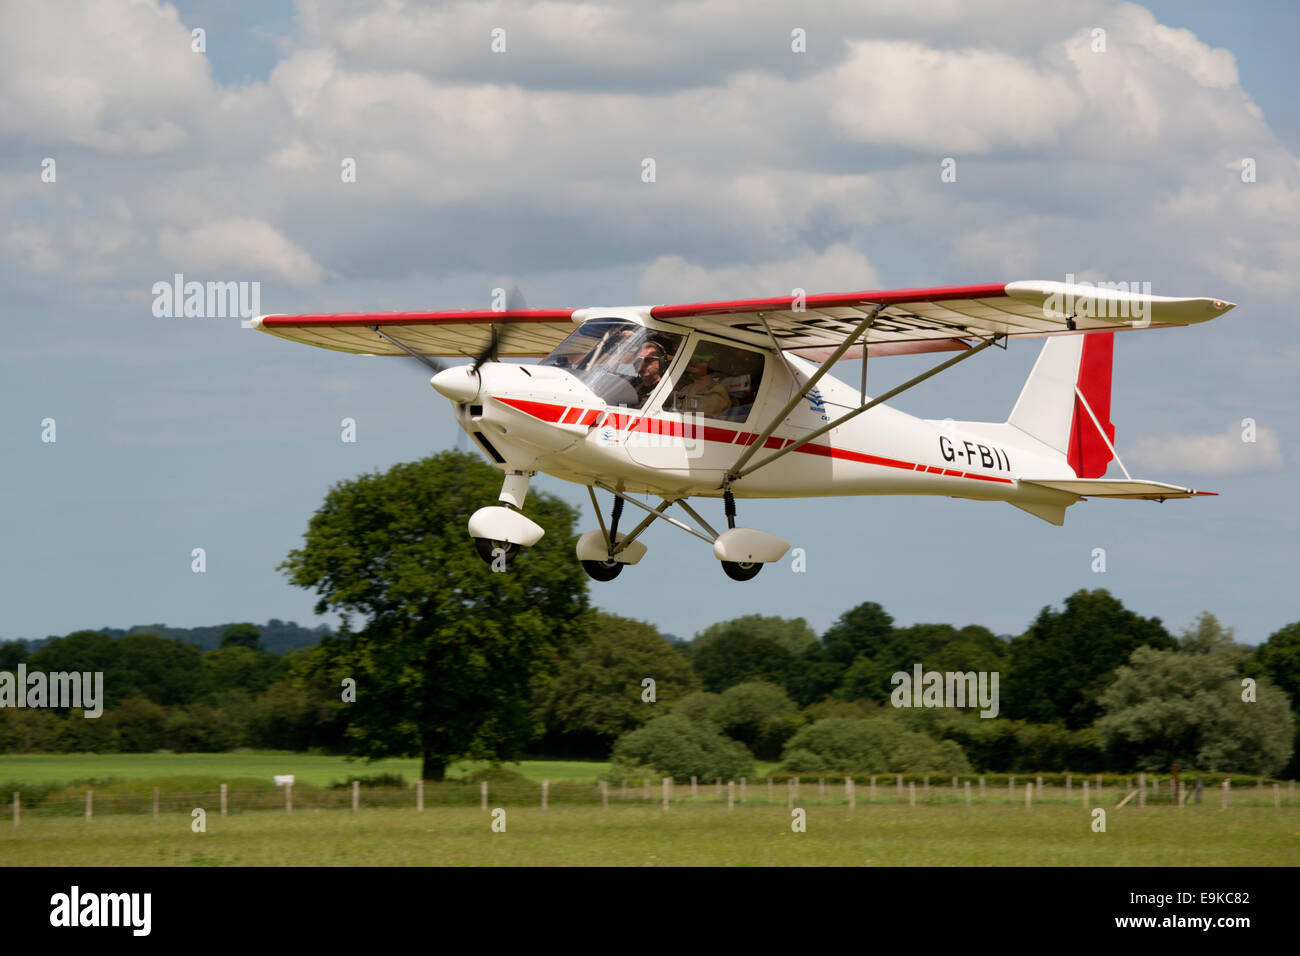 Ikarus C42 FB100 G-FBII taking-off from Headcorn Airfield Stock Photo